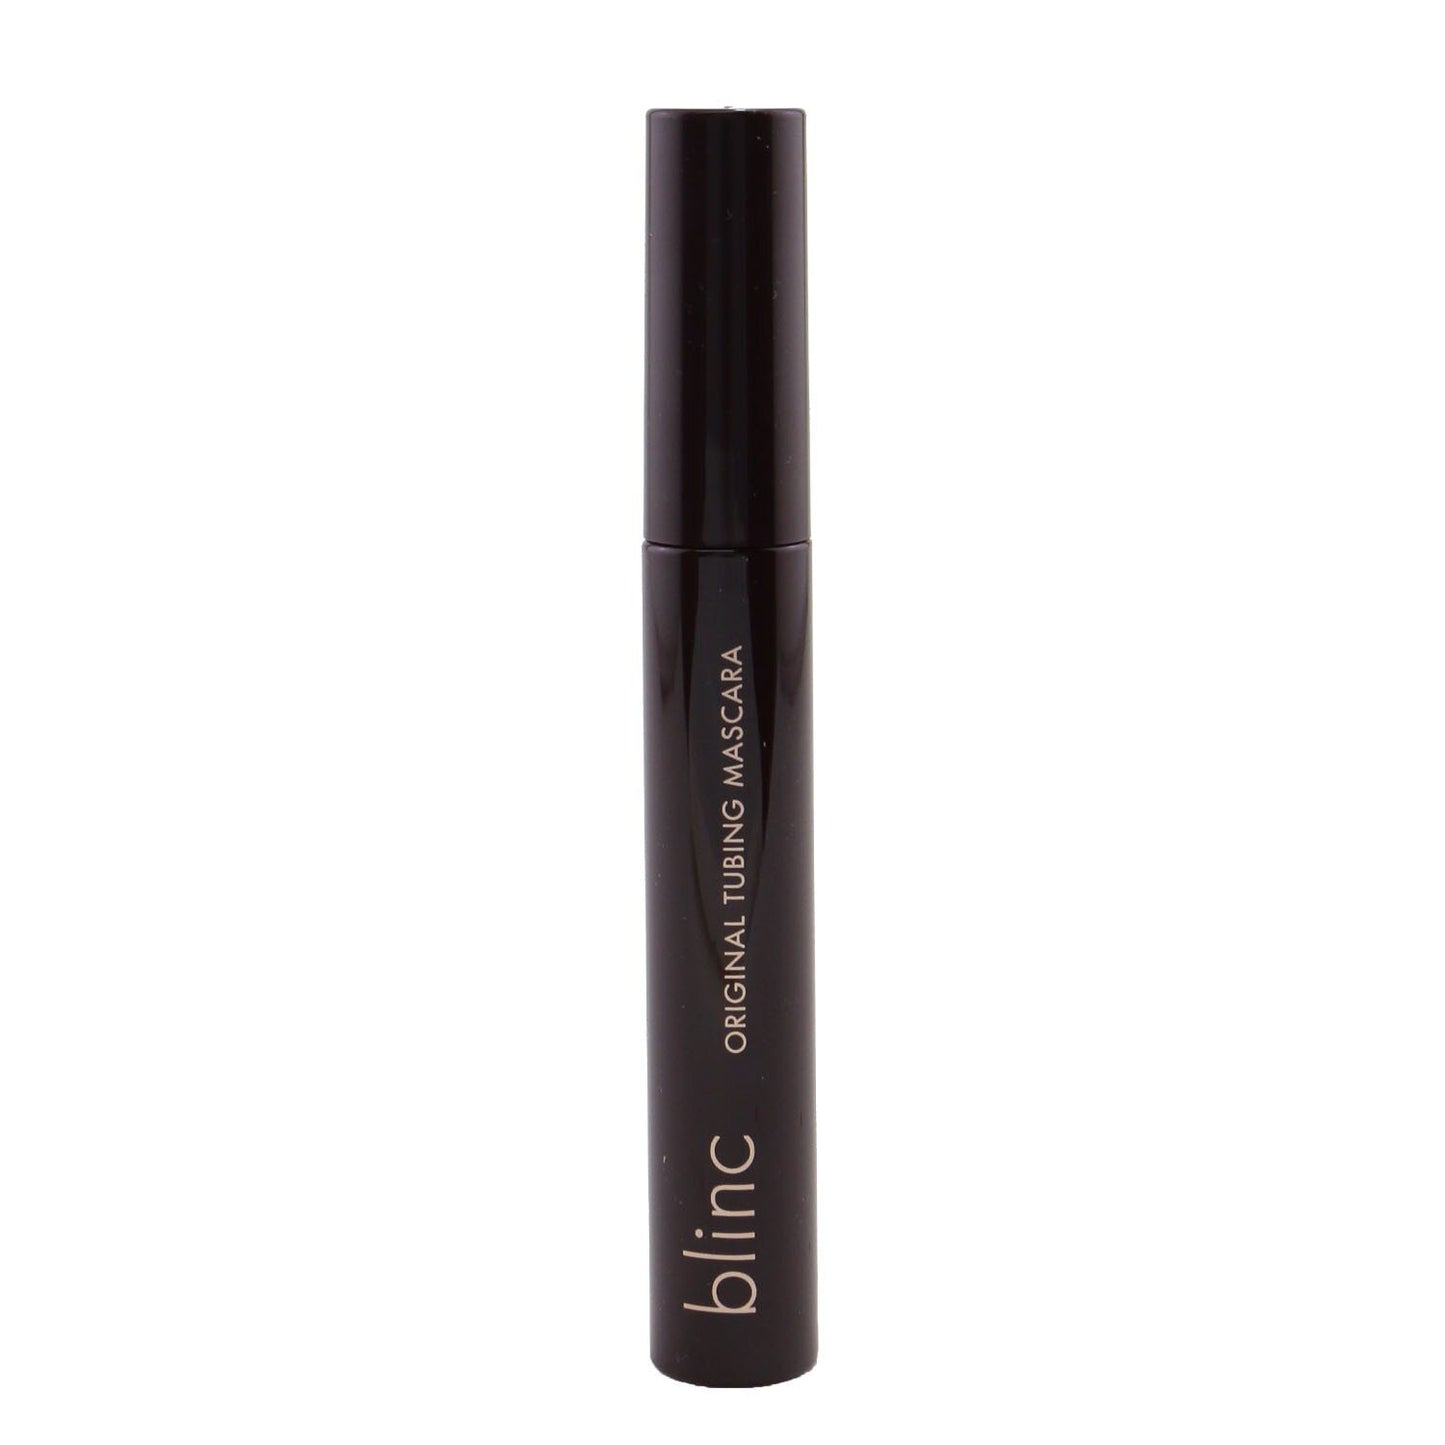 BLINC - Original Tubing Mascara - Black 000217 9ml/0.3oz